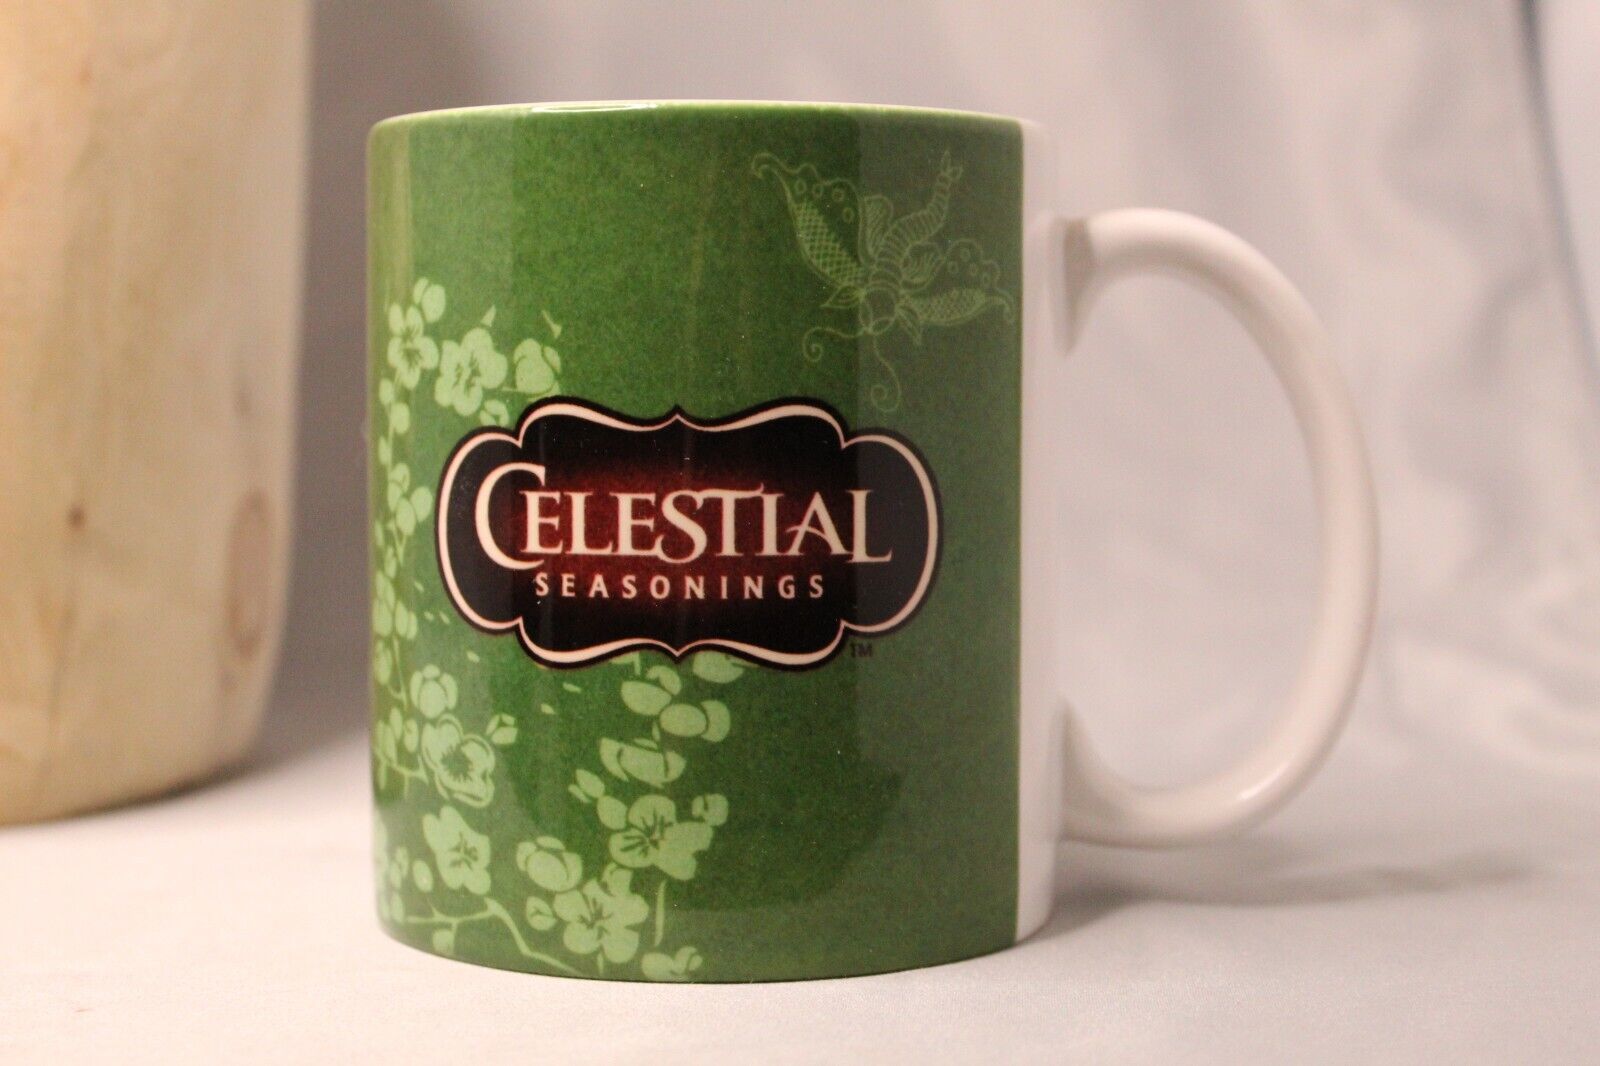 Celestial Seasonings Mug Green Floral 12oz Coffee Tea Cup 2007 New Old Stock - $12.46